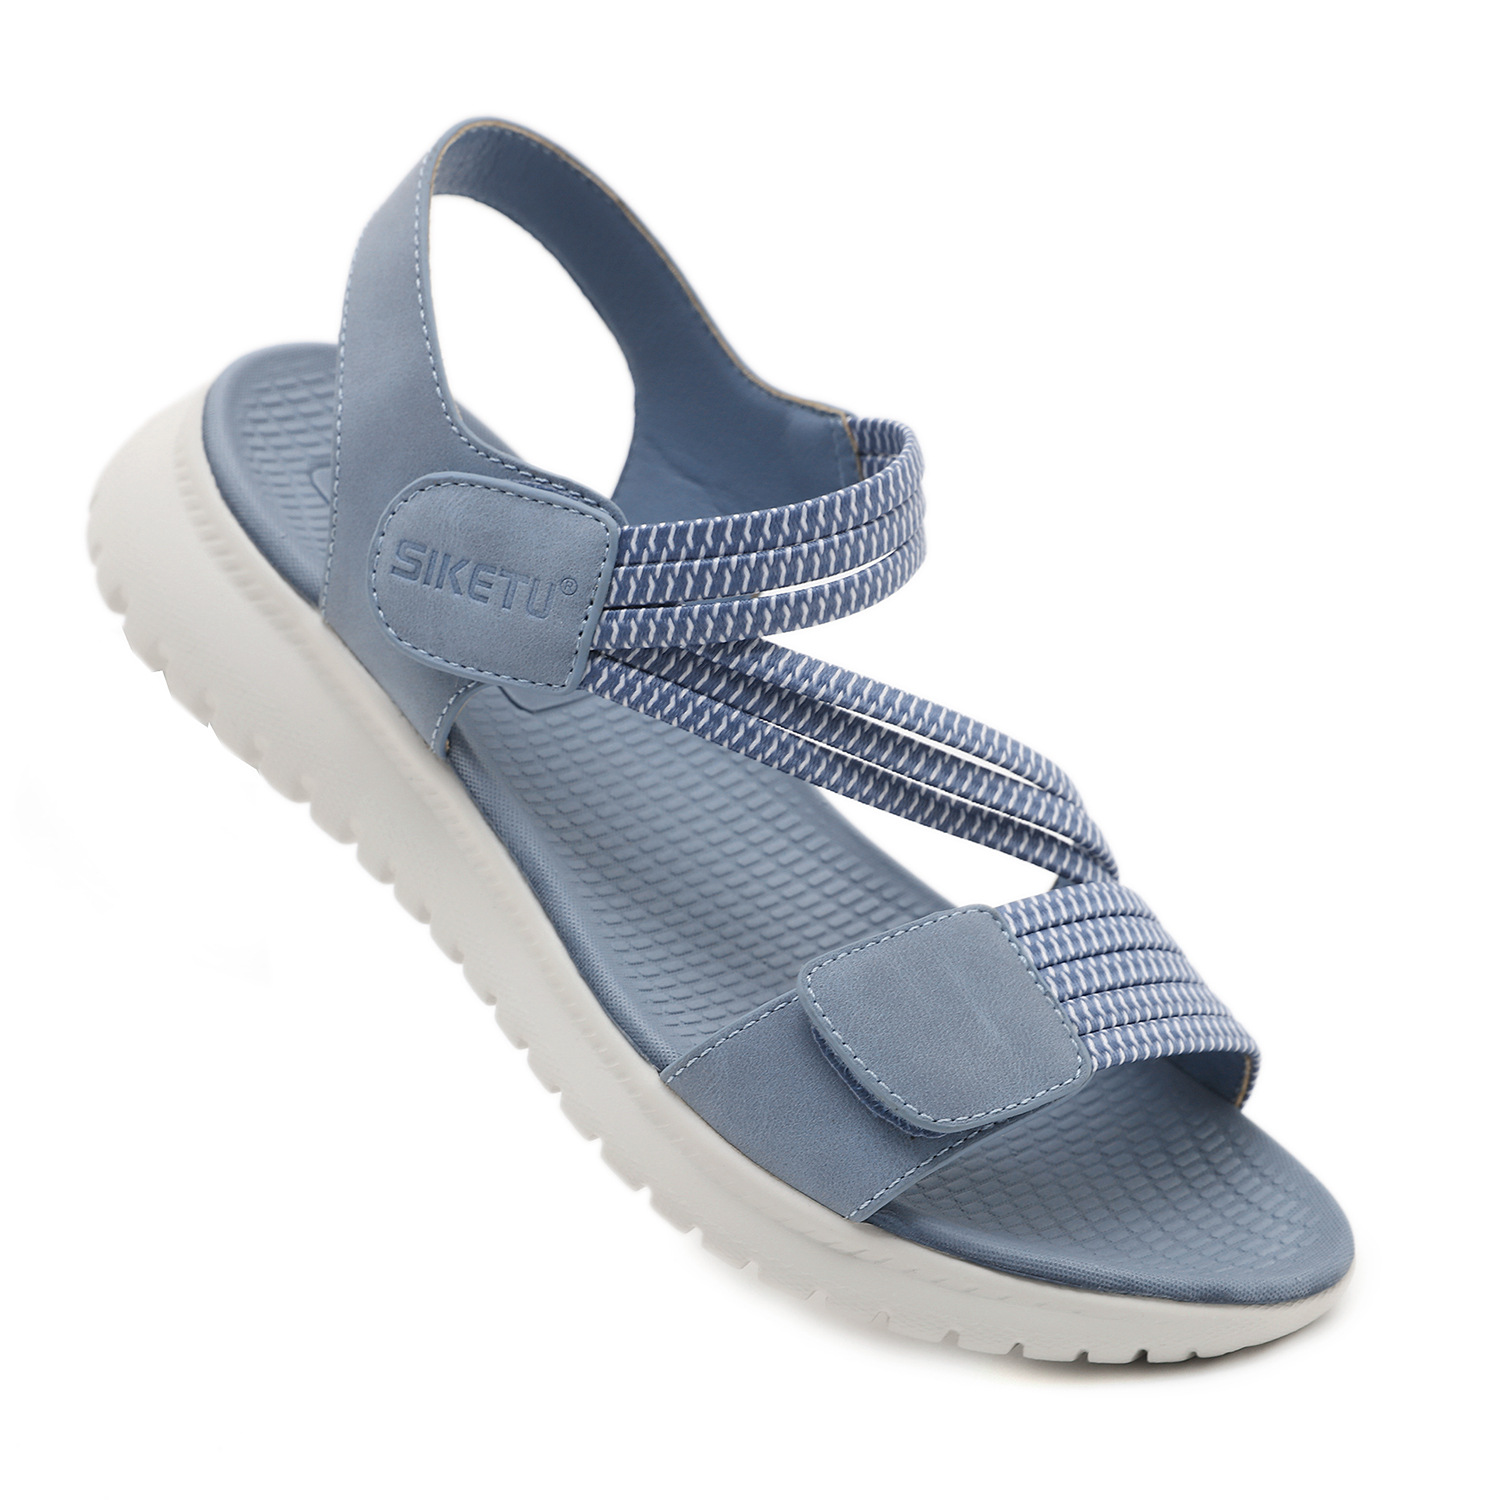 Summer Women Flats Sandals Sport Platform Casual Slippers Walking Ladies Shoes Slides Slingback